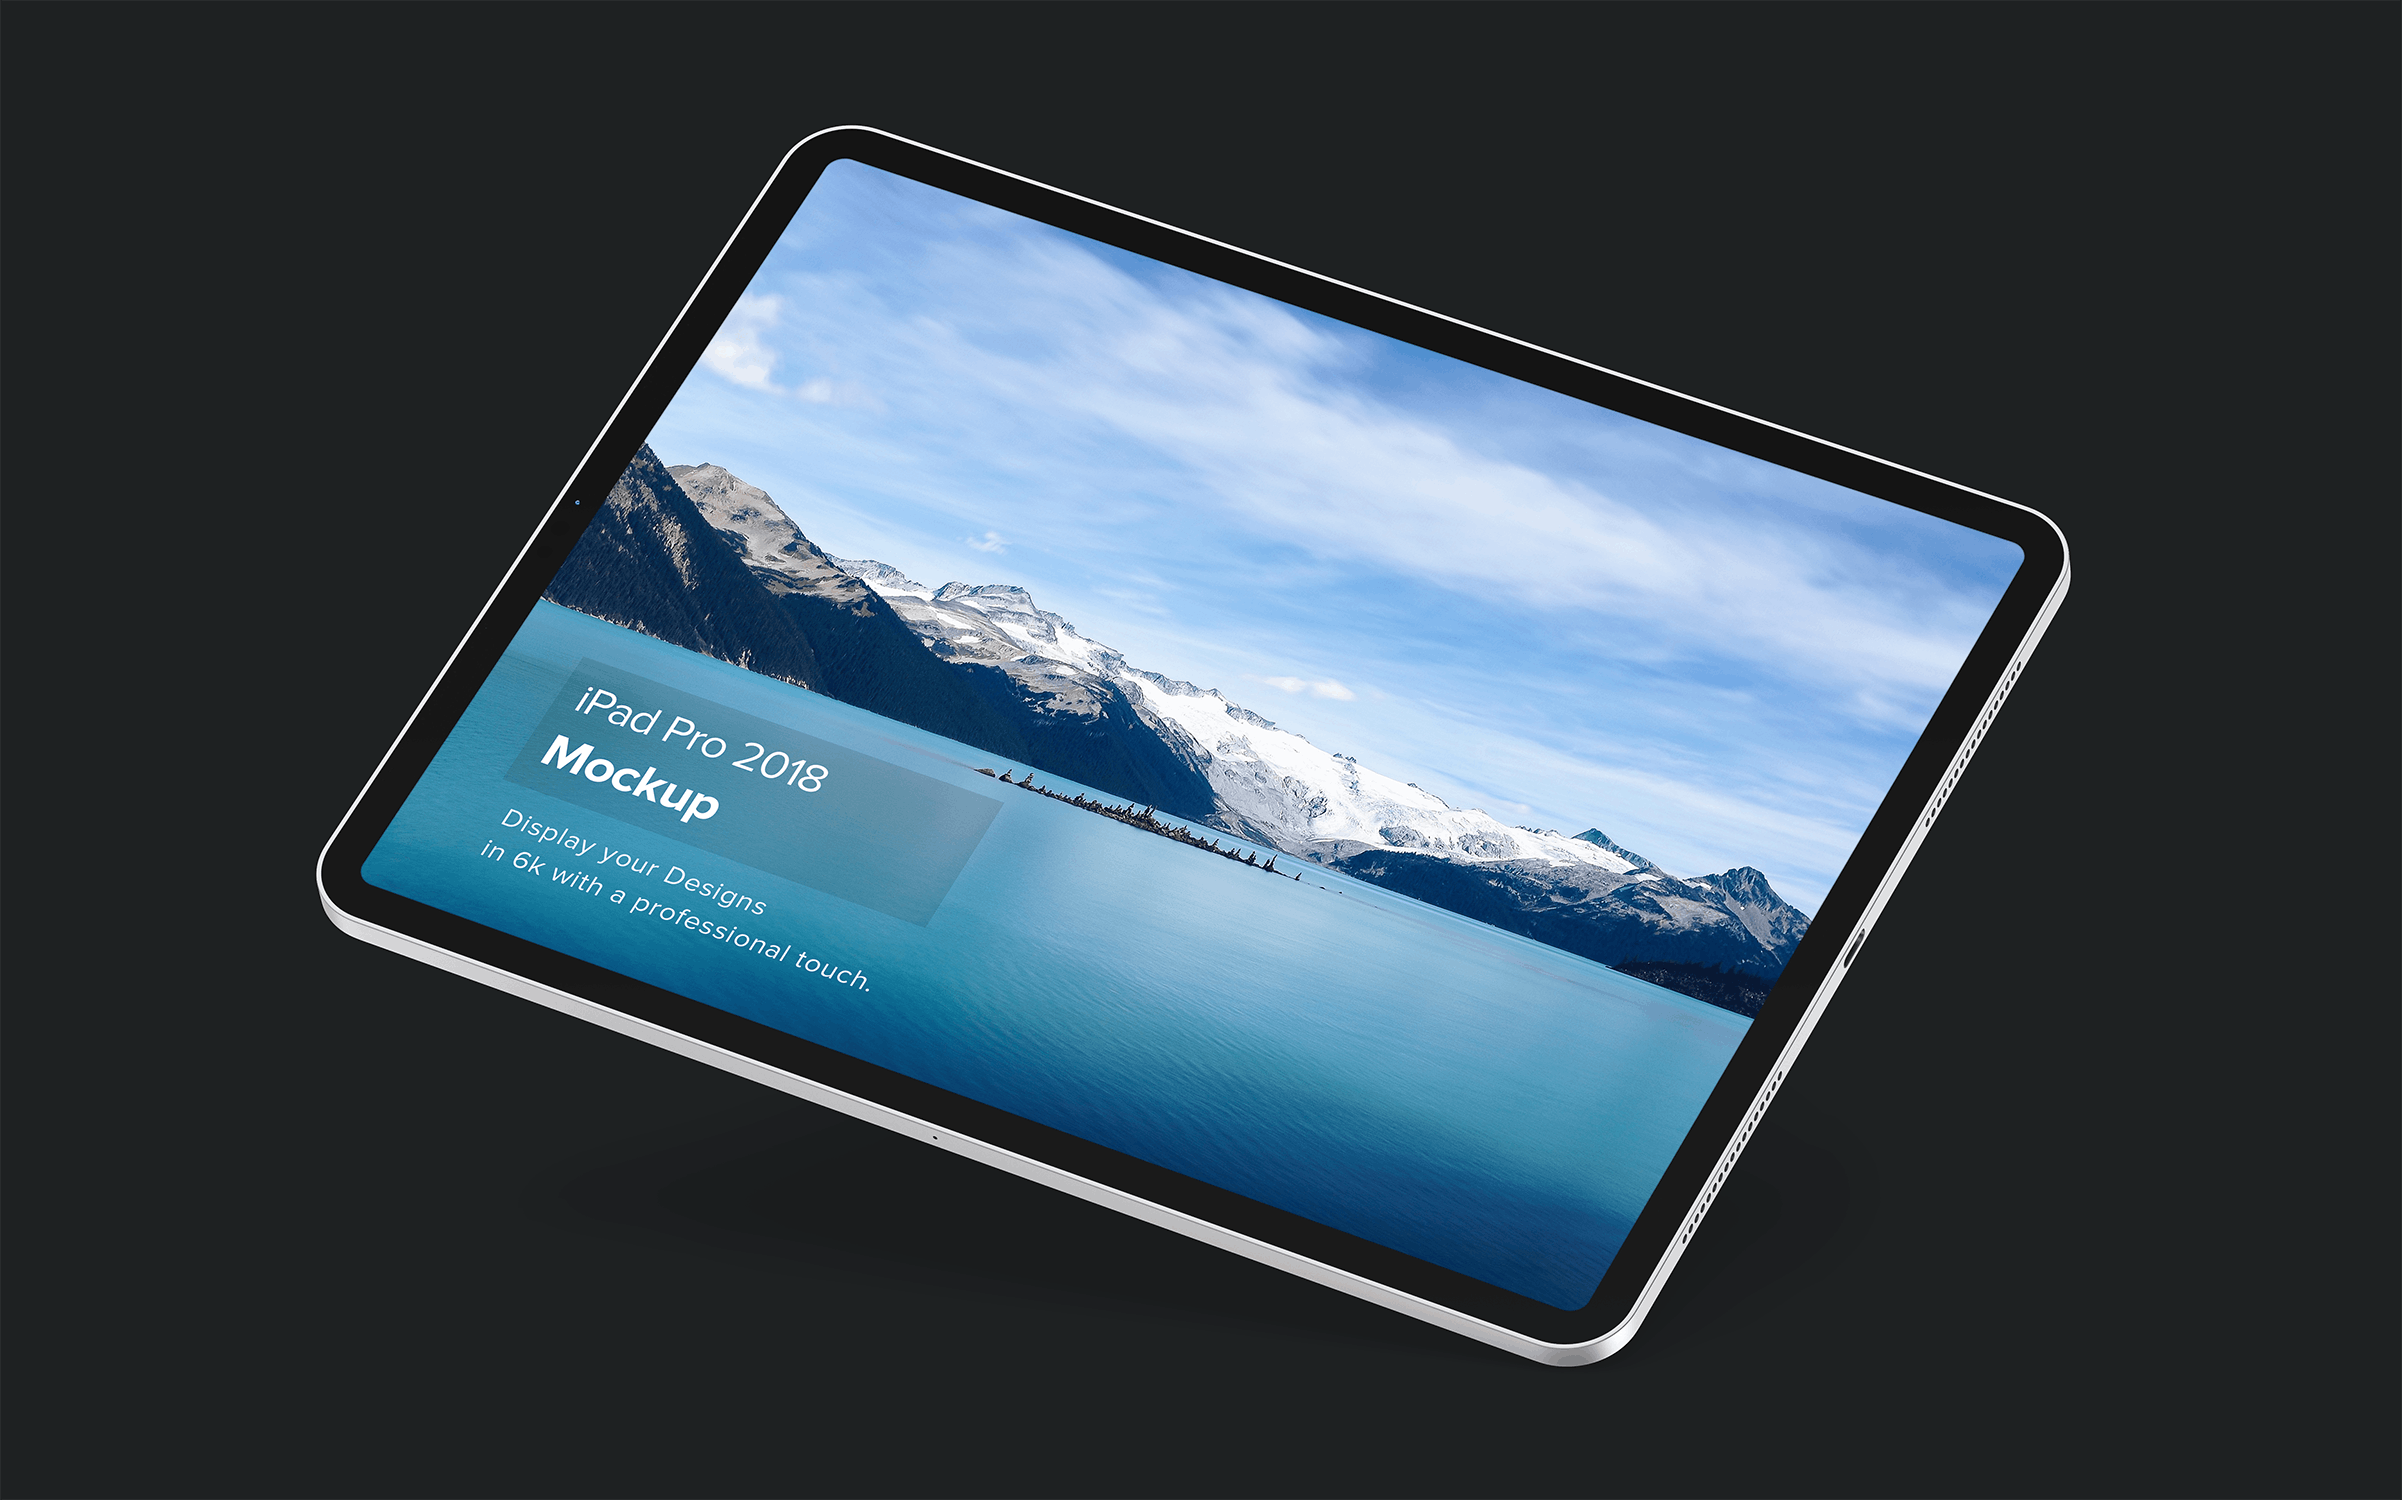 iPad Pro专业平板电脑设计演示素材库精选样机模板套装v2 iPad Mockup 2.0插图(6)